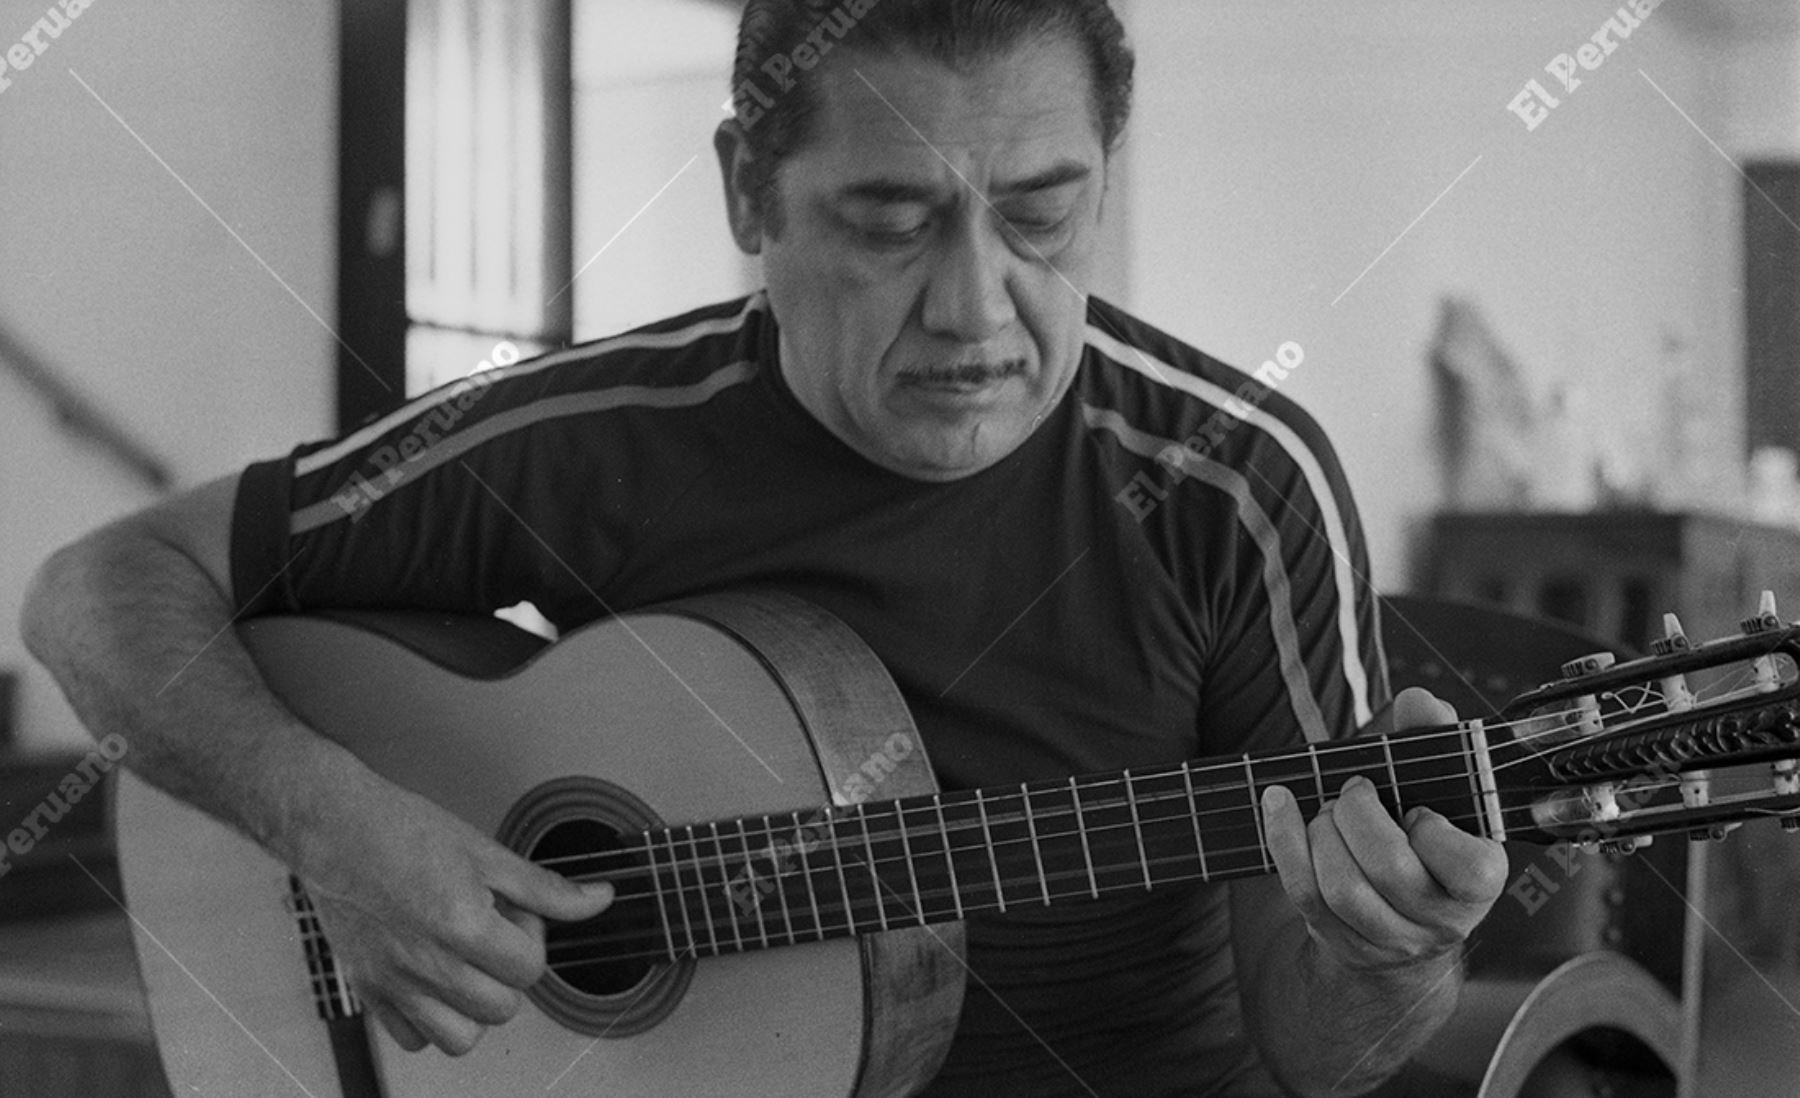 Lima - 25 diciembre 1974 / Oscar Avilés, considerado "La primera guitarra del Perú". Foto: Archivo Histórico de El Peruano